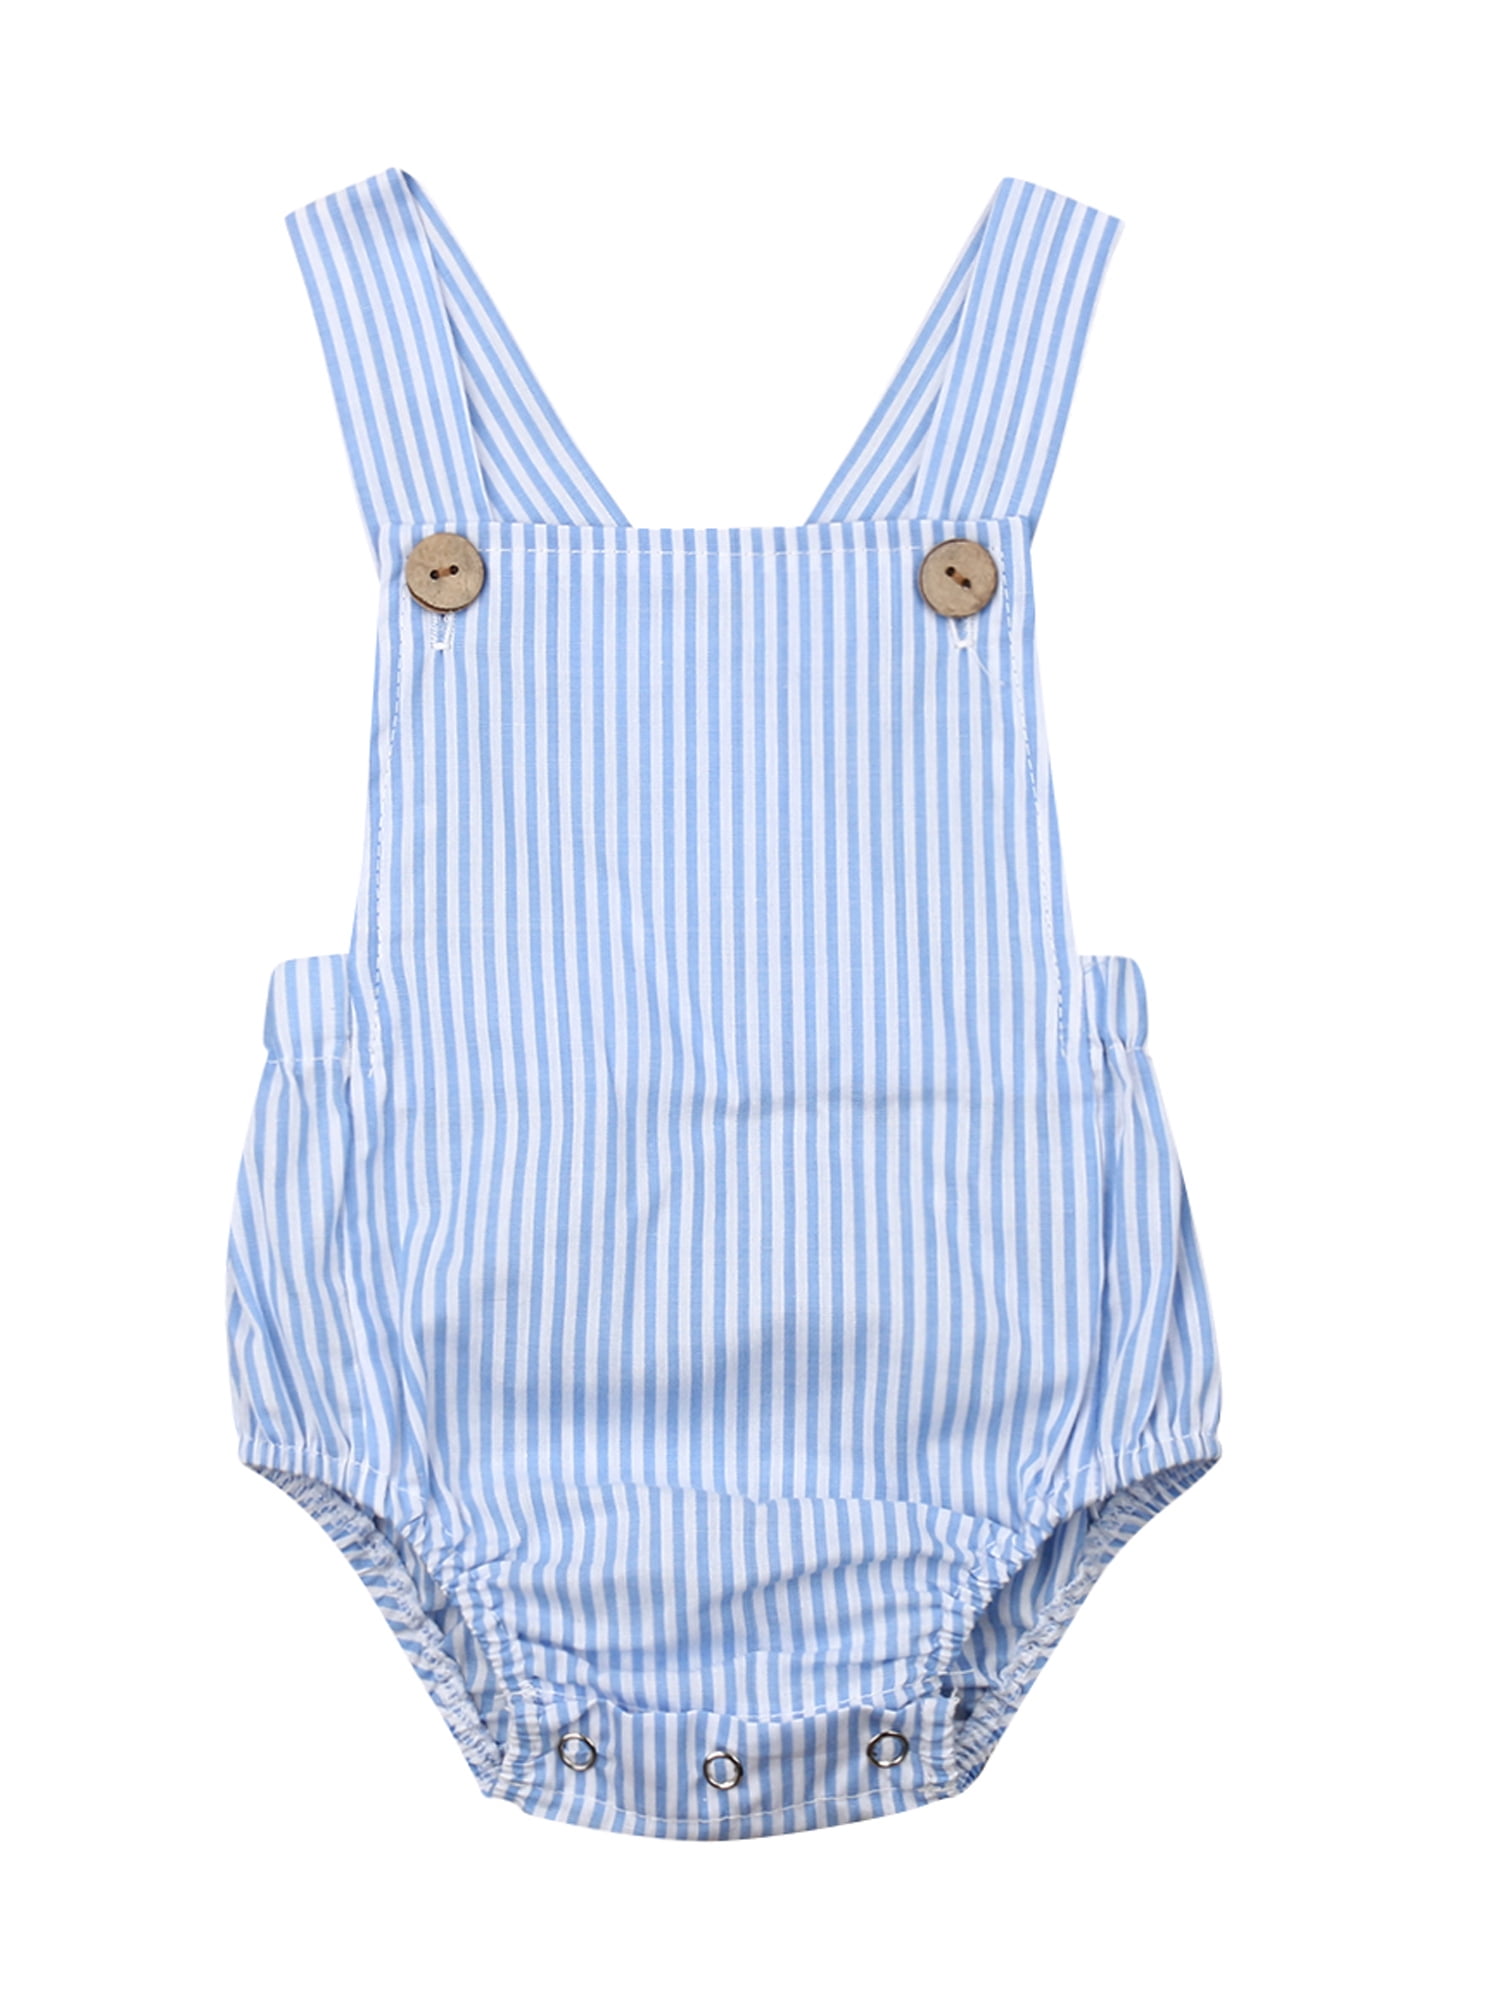 Infant Baby Boy Girl Romper Bodysuit Jumpsuit Summer Soft Clothes Outfits Sunsui 